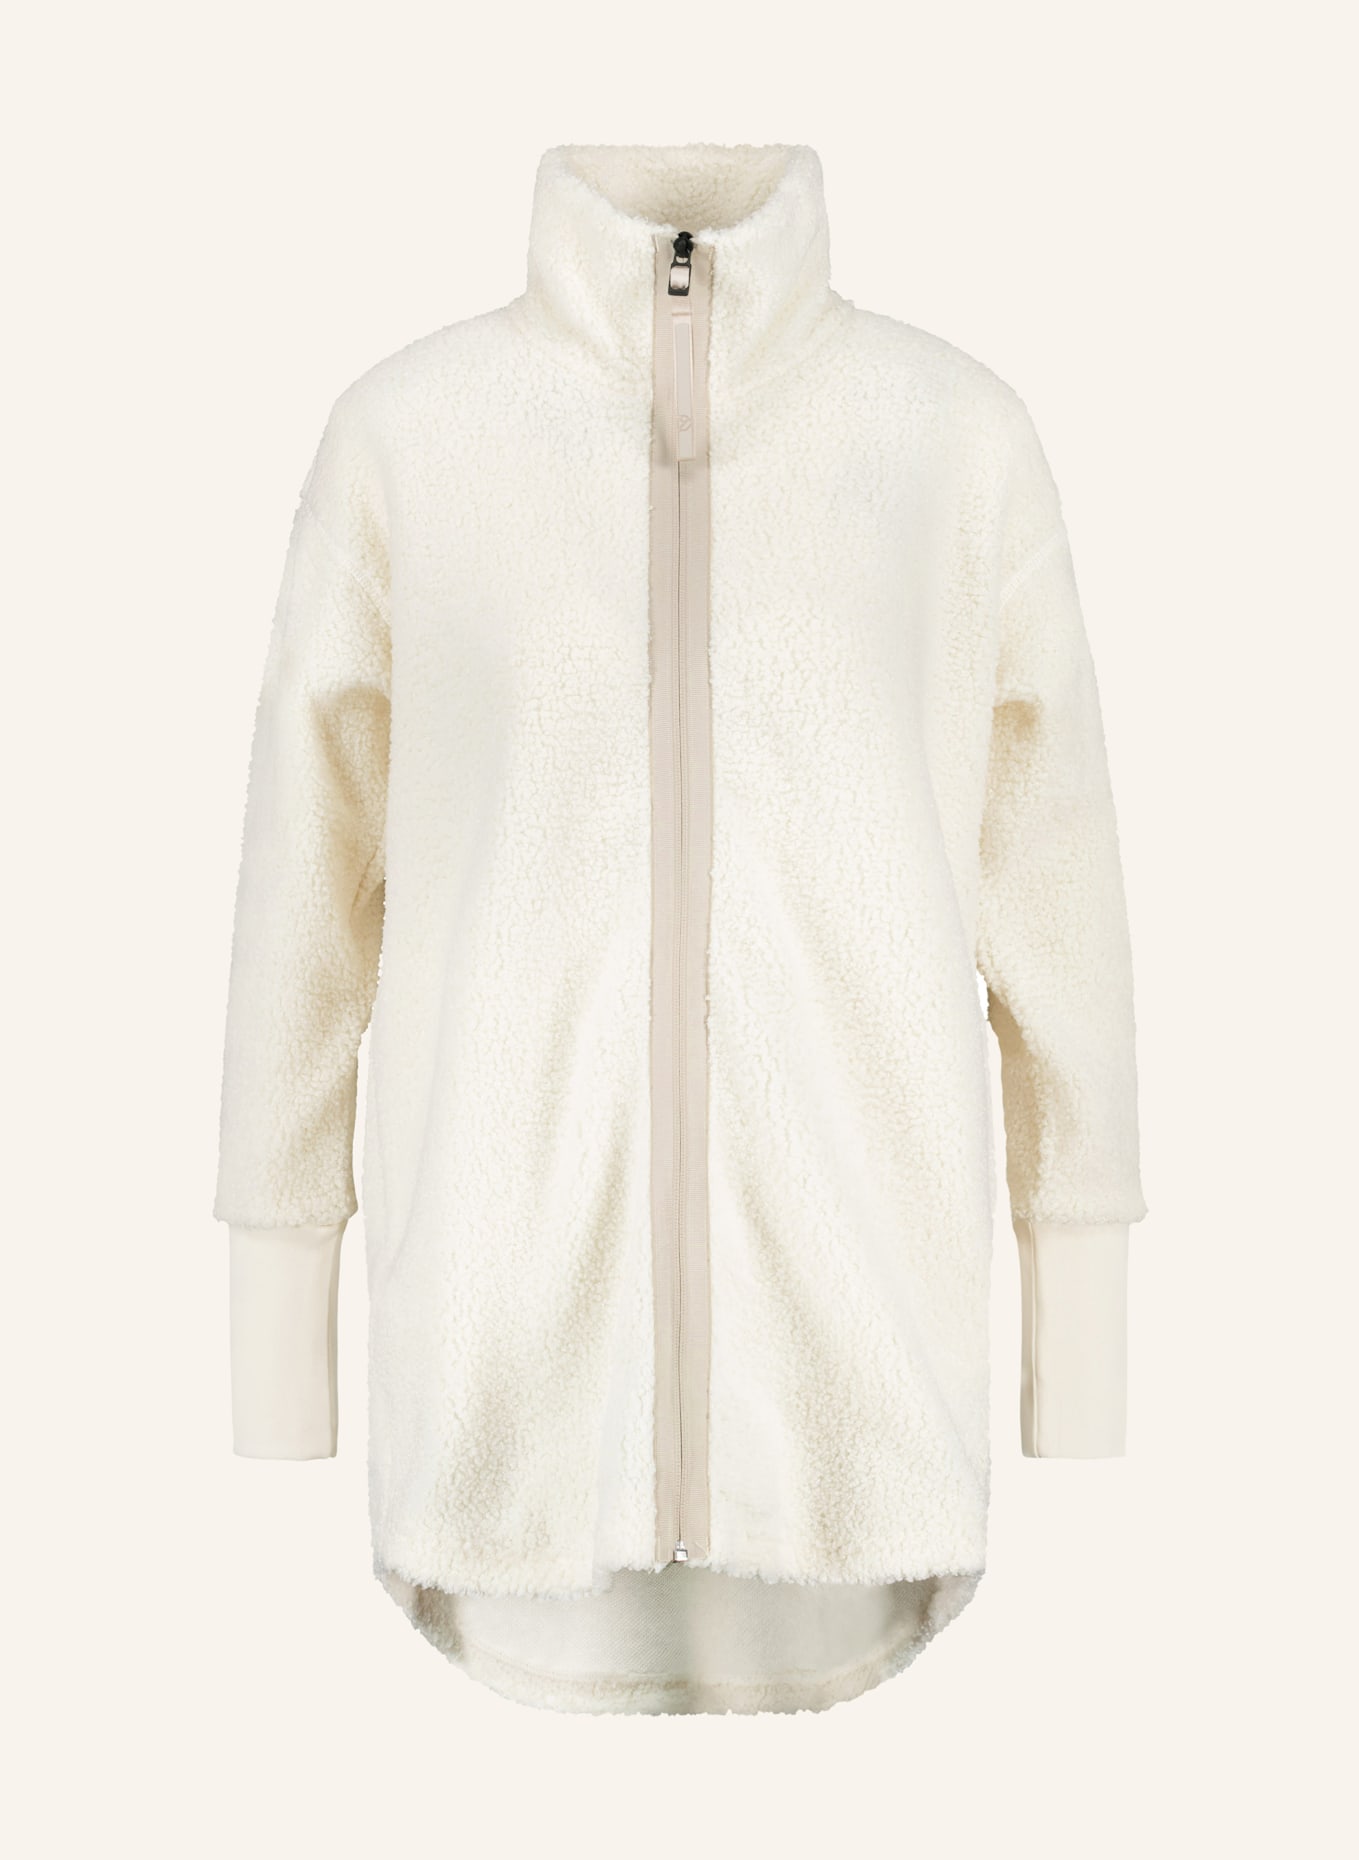 DIDRIKSONS Fleece-Jacke SALLY, Farbe: 600 WHITE FOAM (Bild 1)